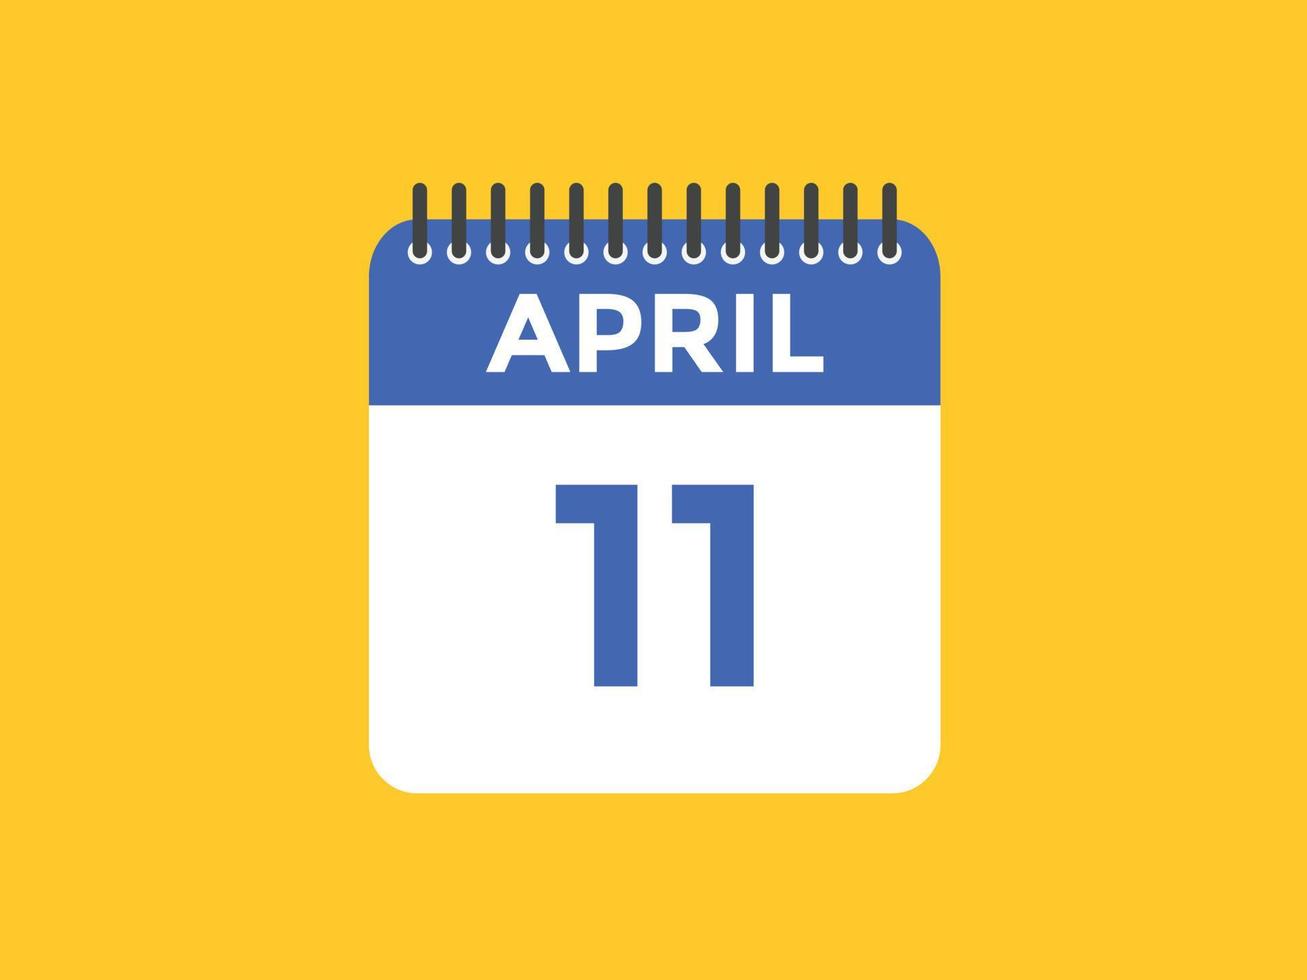 april 11 kalender påminnelse. 11th april dagligen kalender ikon mall. kalender 11th april ikon design mall. vektor illustration